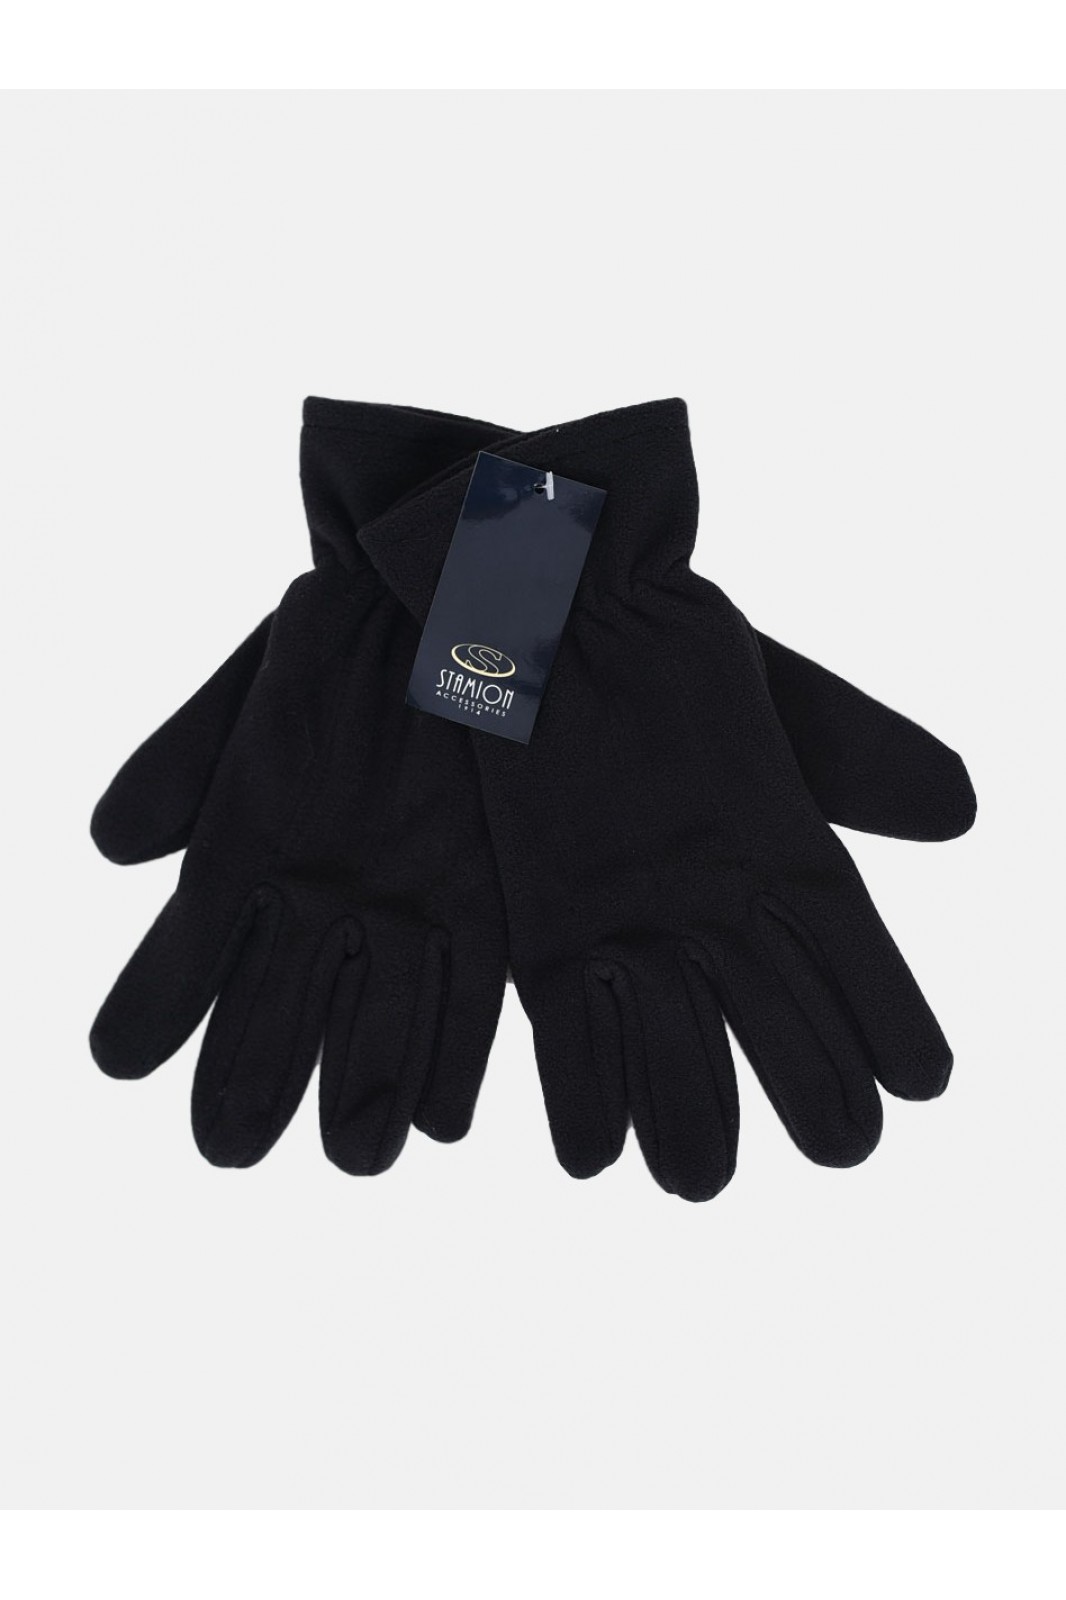 STAMION Fleece Gloves UNISEX